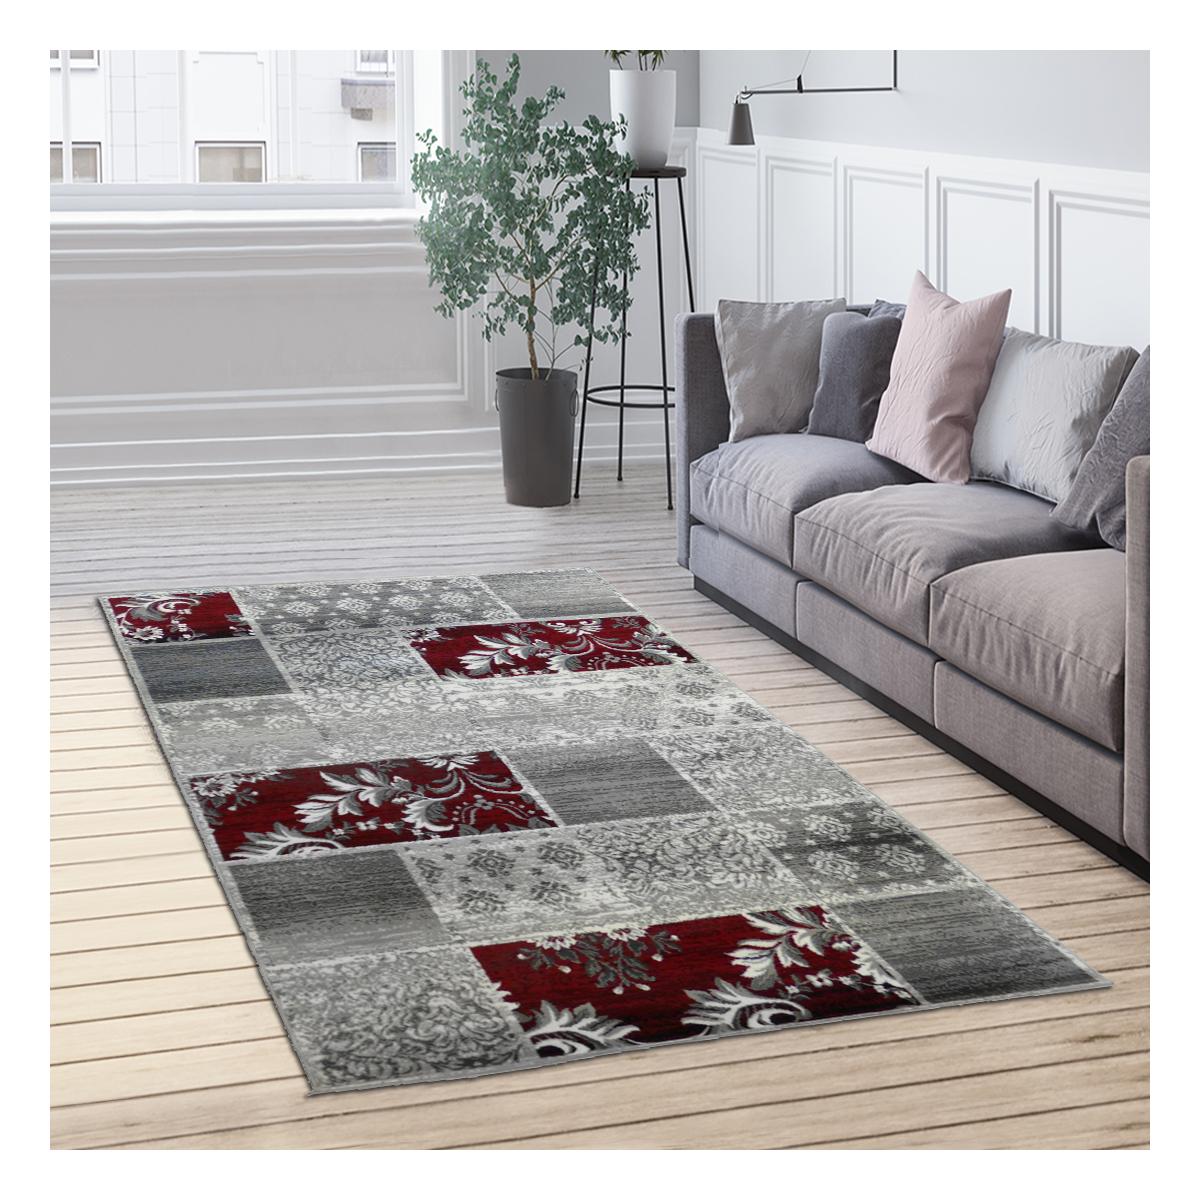 TURO01 tapis de salon rectangulaire rouge antidérapant design moderne